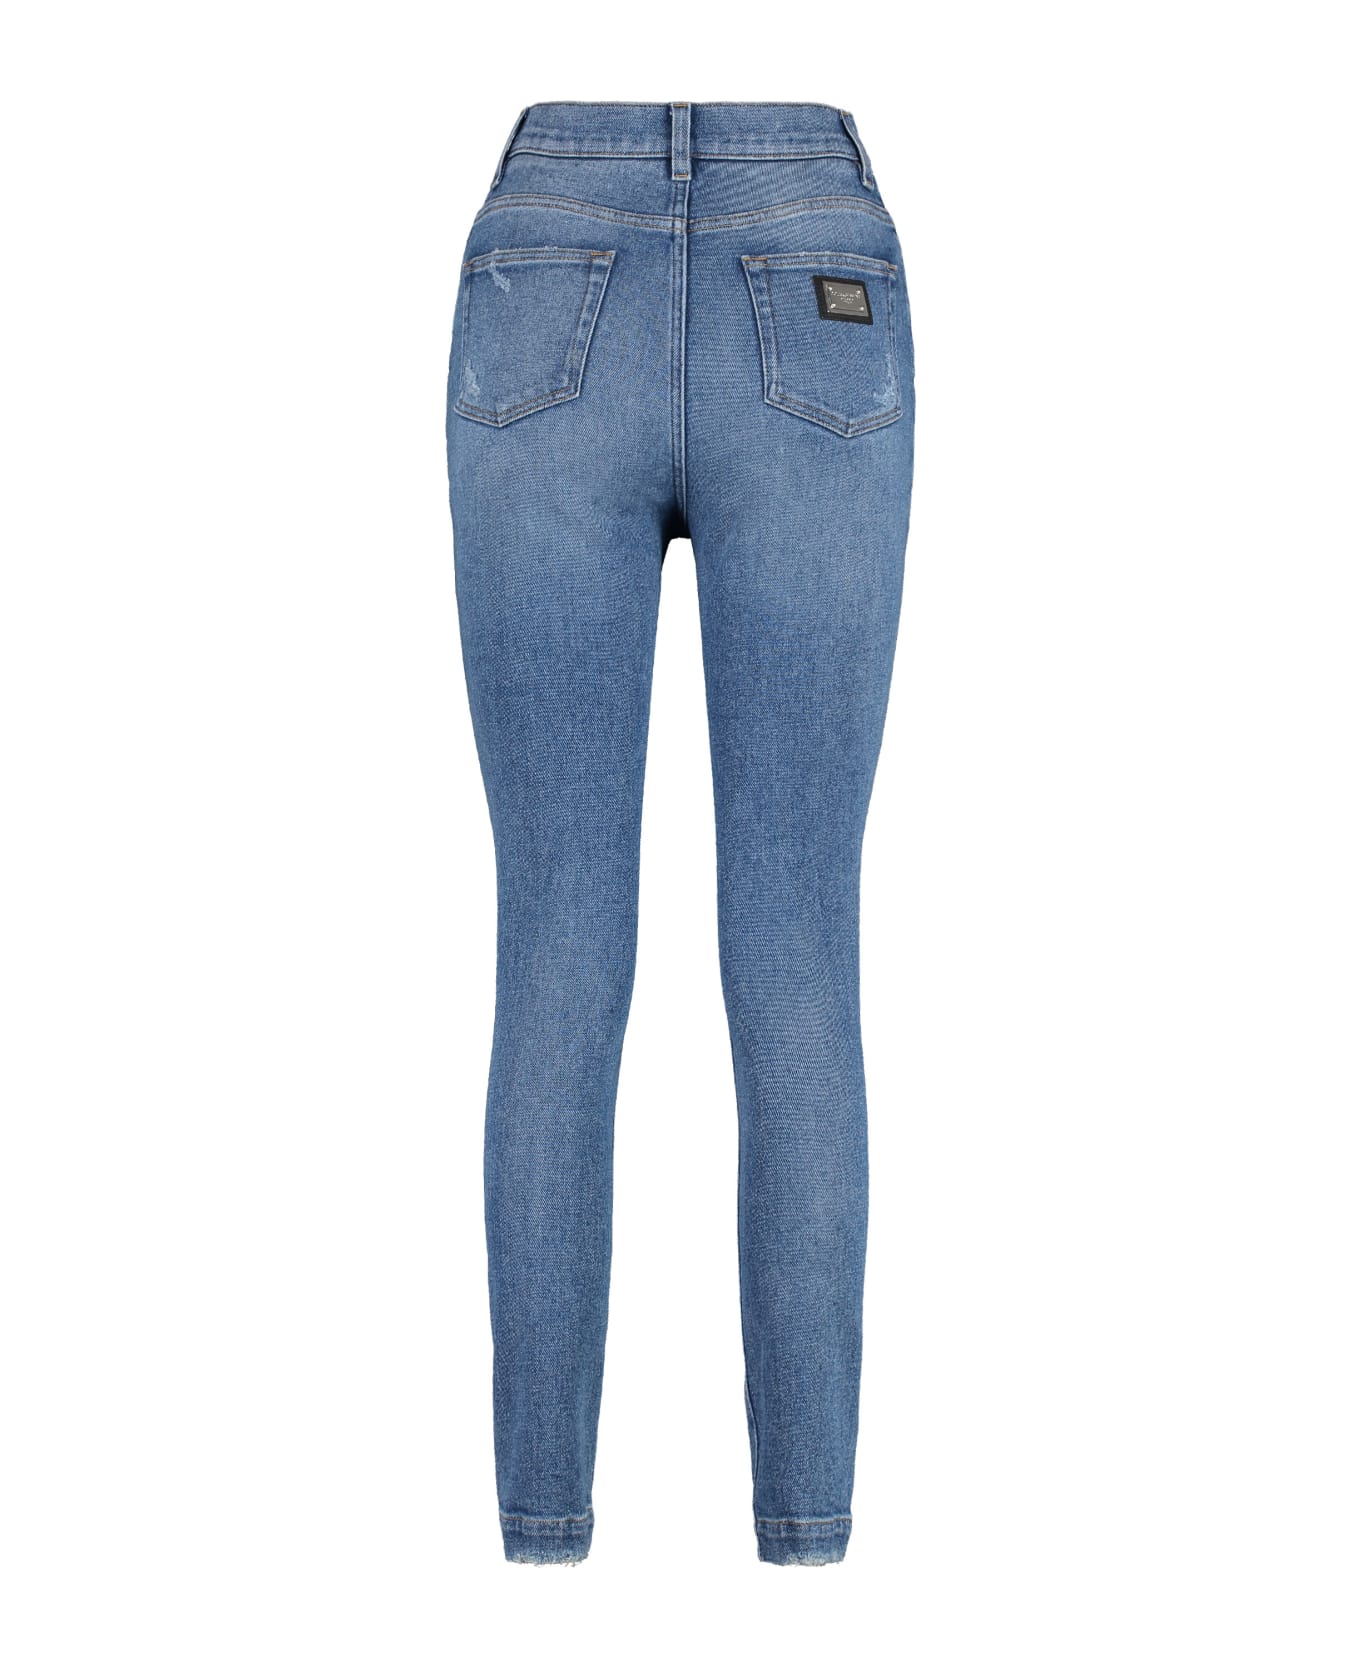 Dolce & Gabbana Distressed Detail Jeans - Blue